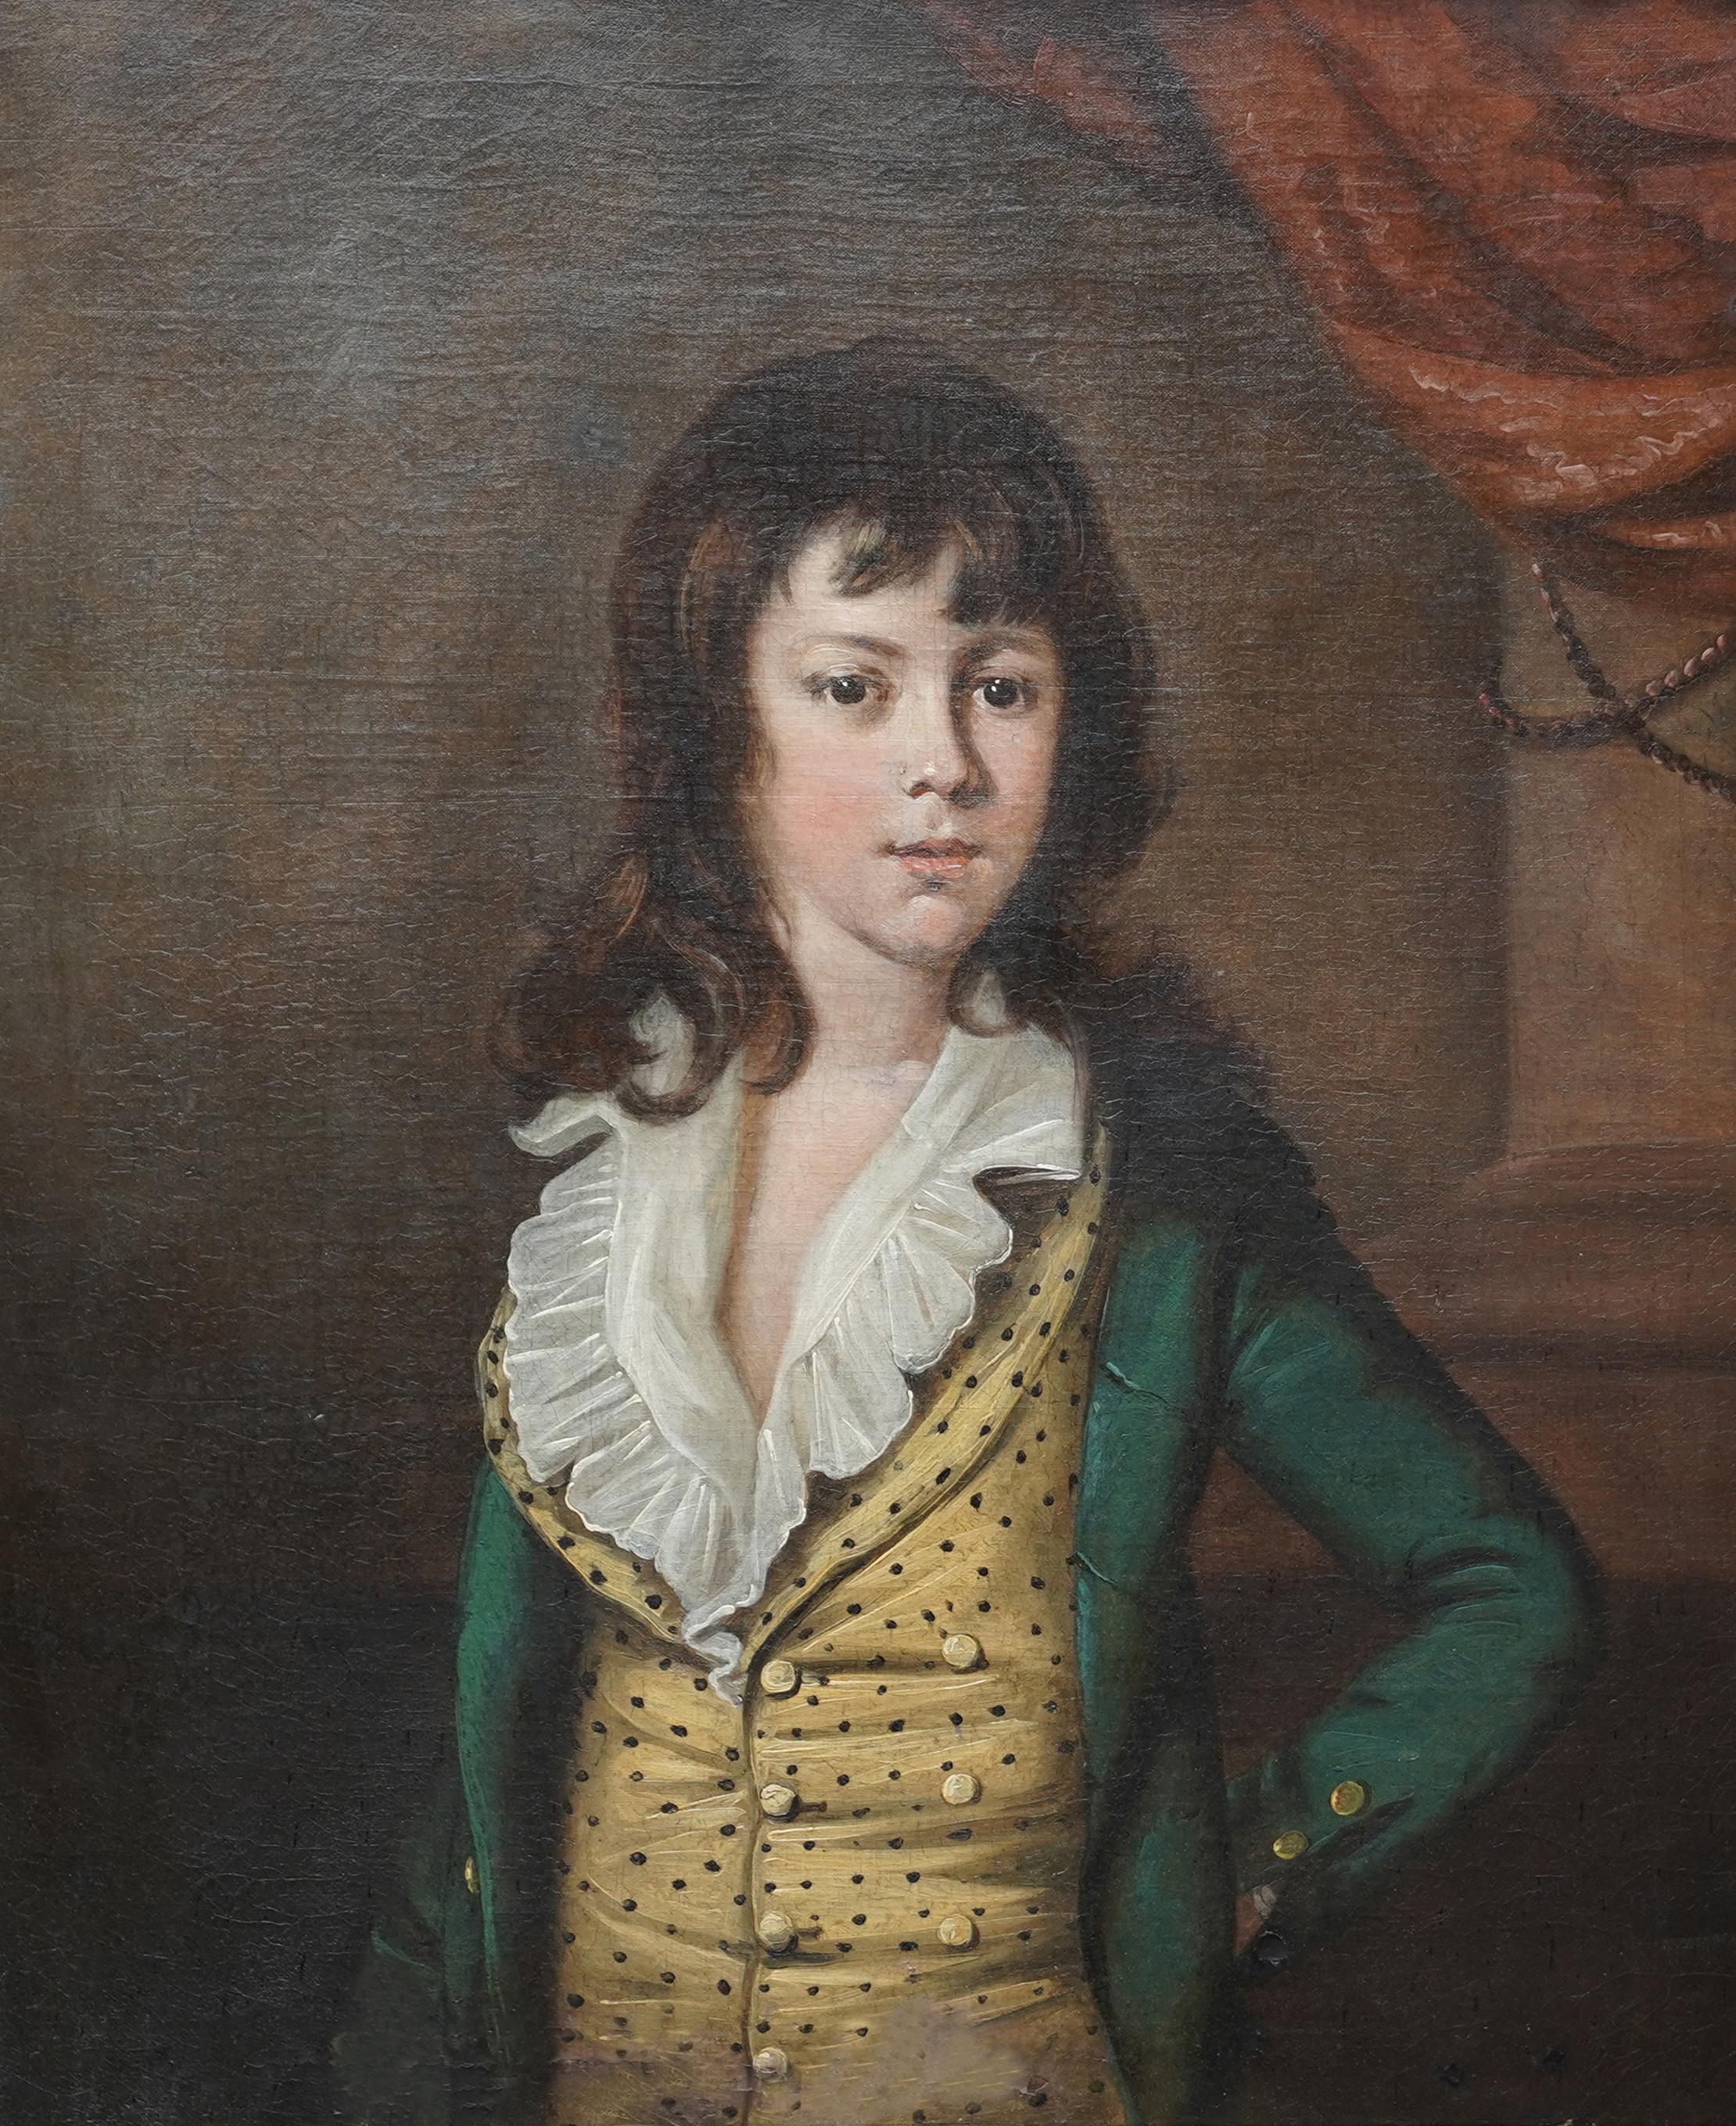 Portrait of Boy in Yellow Waistcoat - British 18thC art Old Master oil painting - Black Portrait Painting by John Berridge